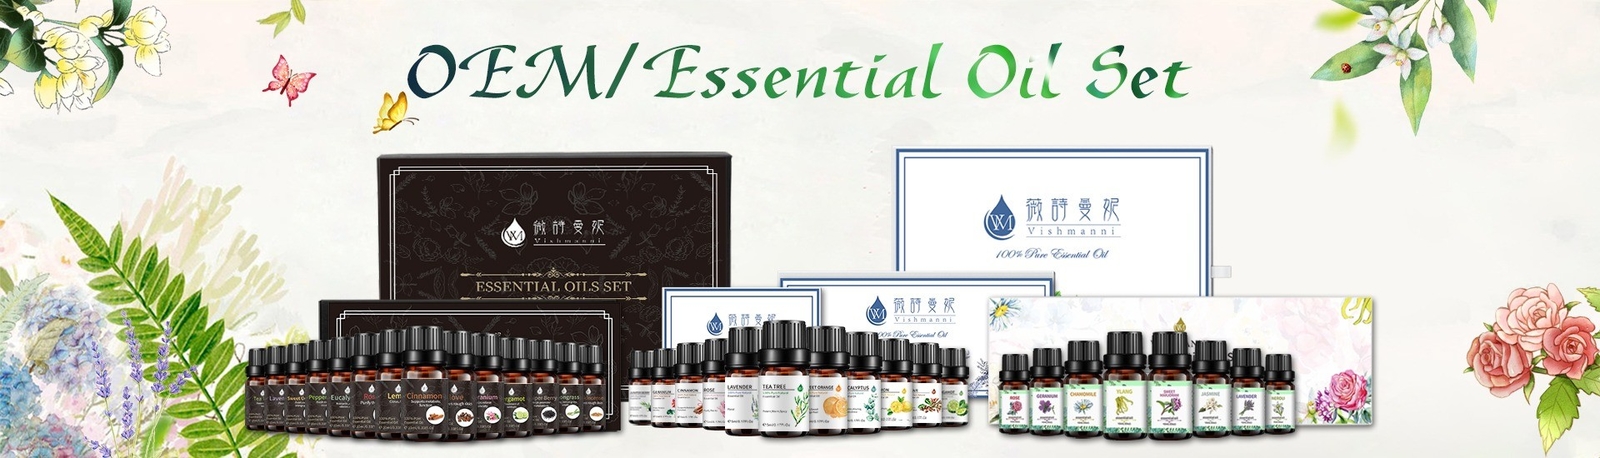 quality 100 Pure Organic Essential Oils factory